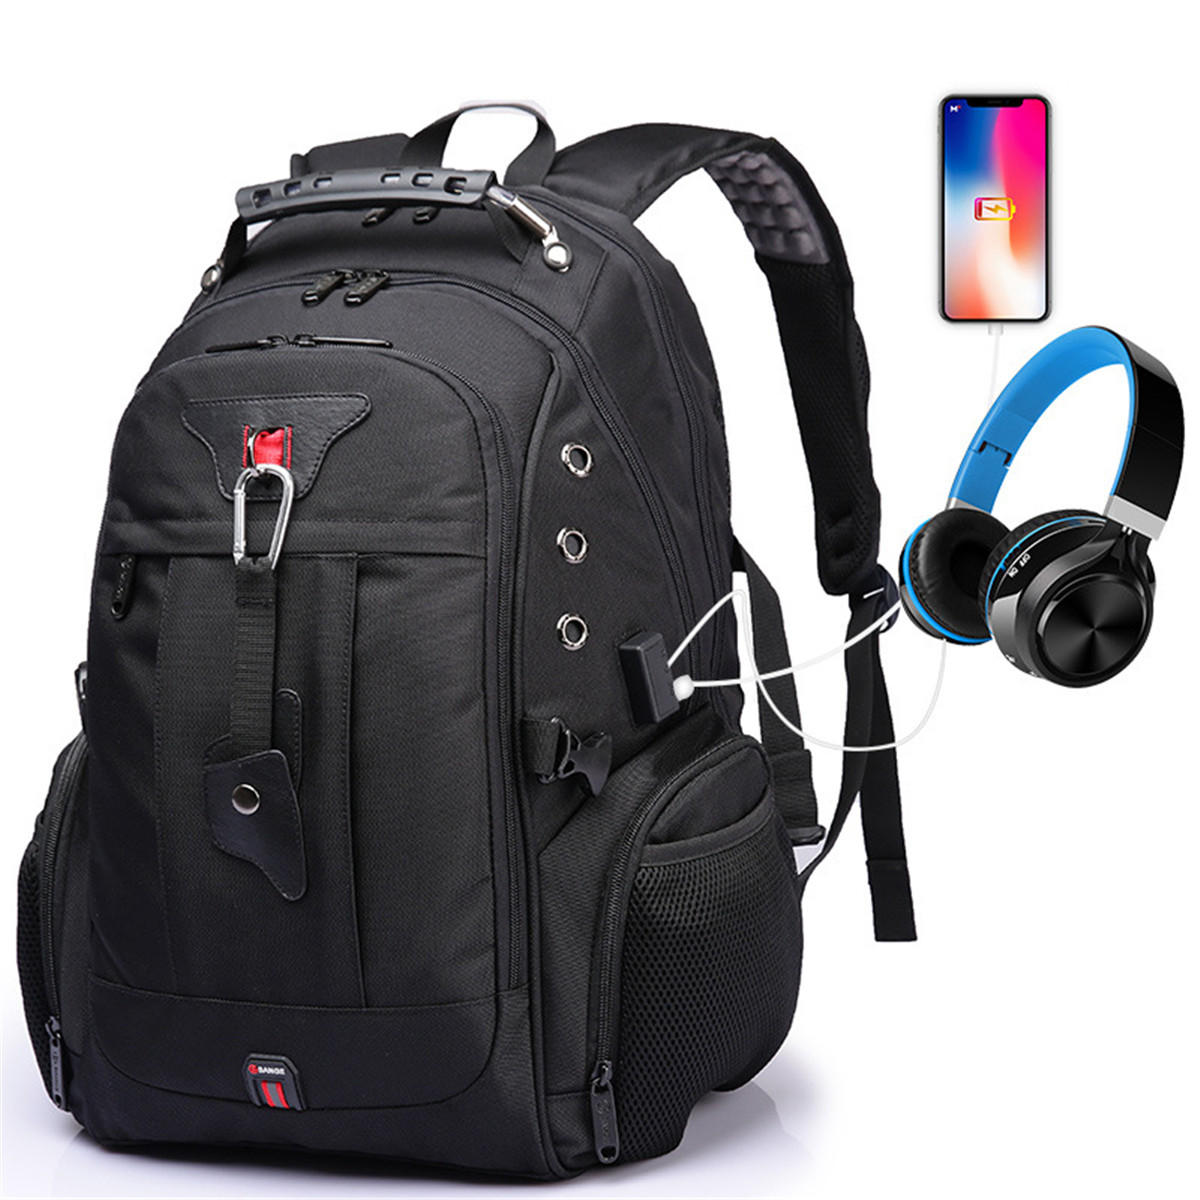 waterproof usb port headphone hole school backpack laptop travel bag ...